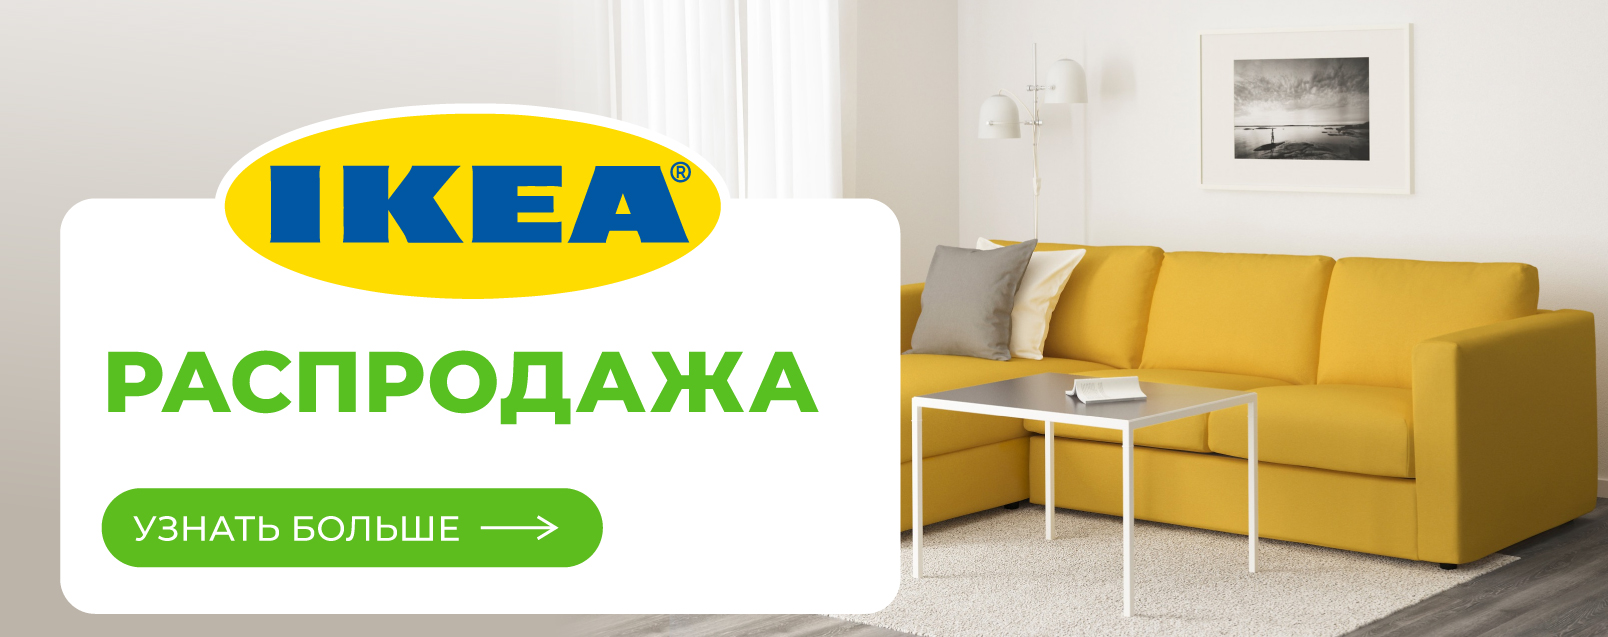 Распродажа IKEA